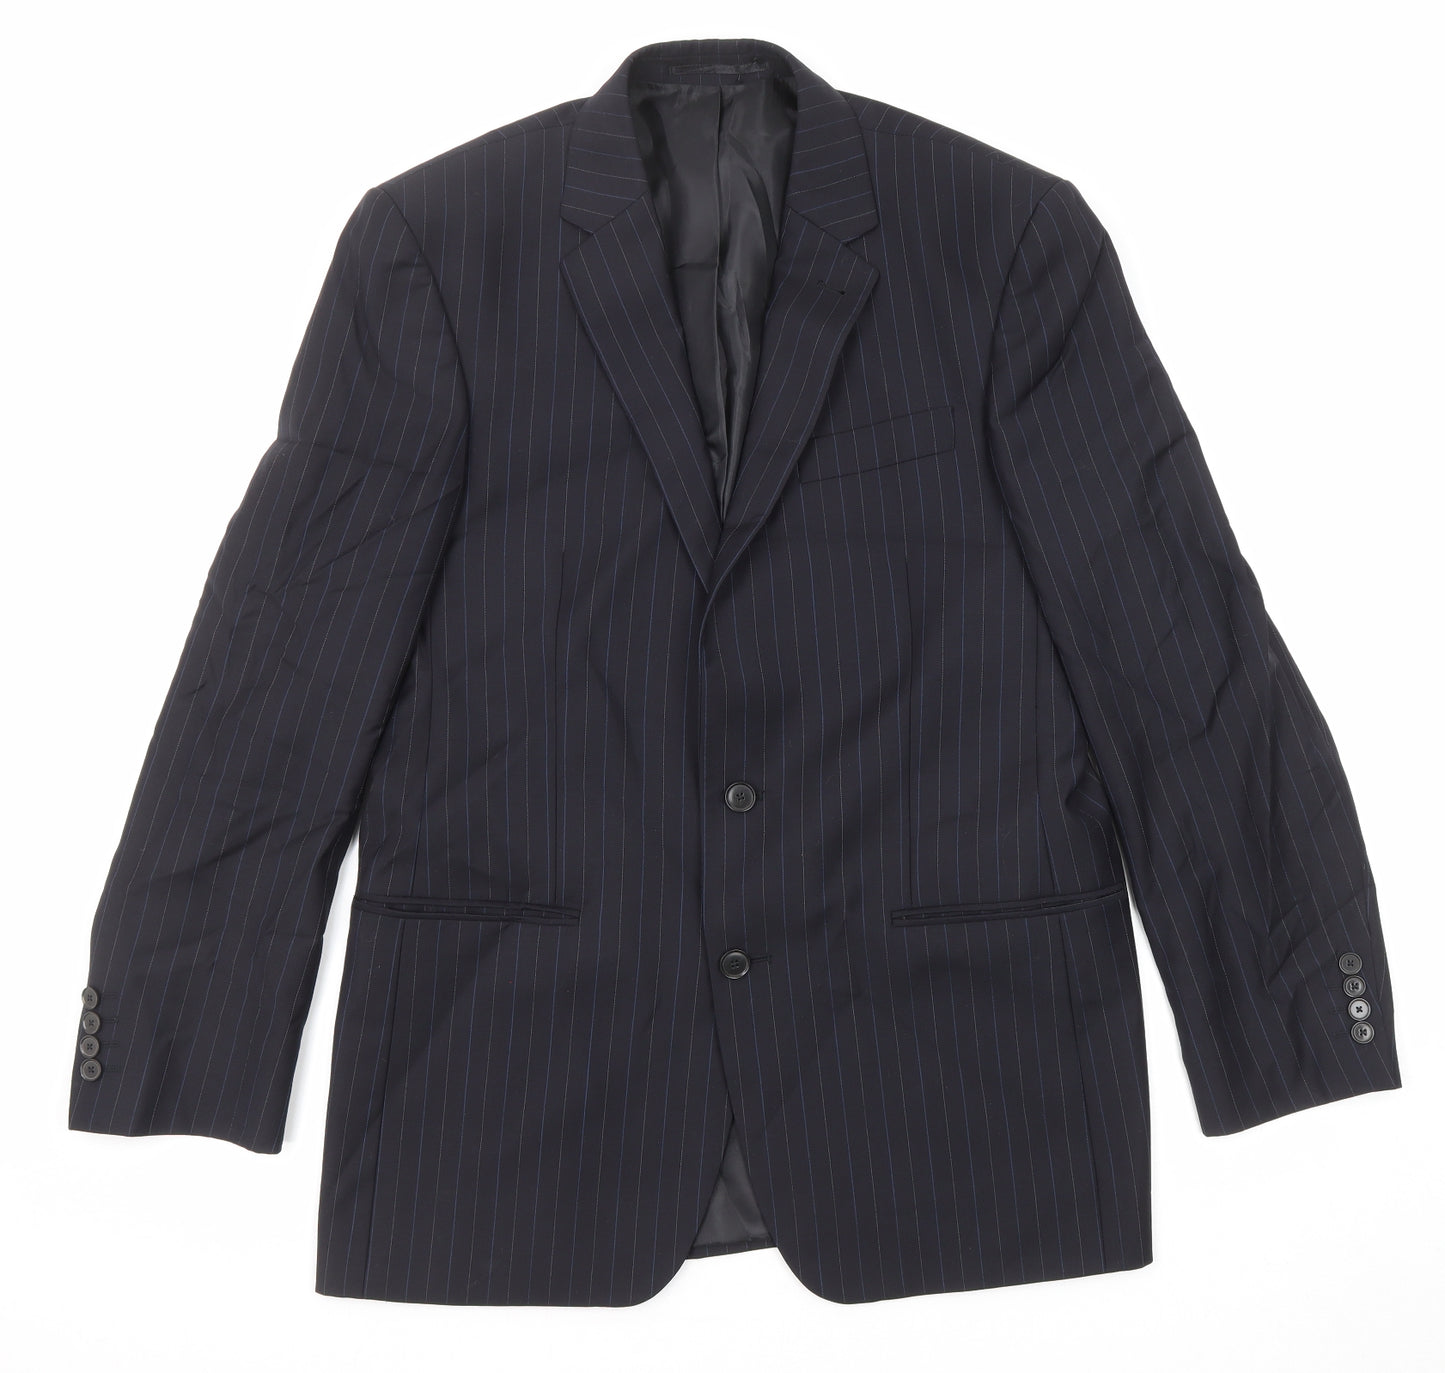 NEXT Mens Blue Striped Wool Jacket Suit Jacket Size 40 Regular